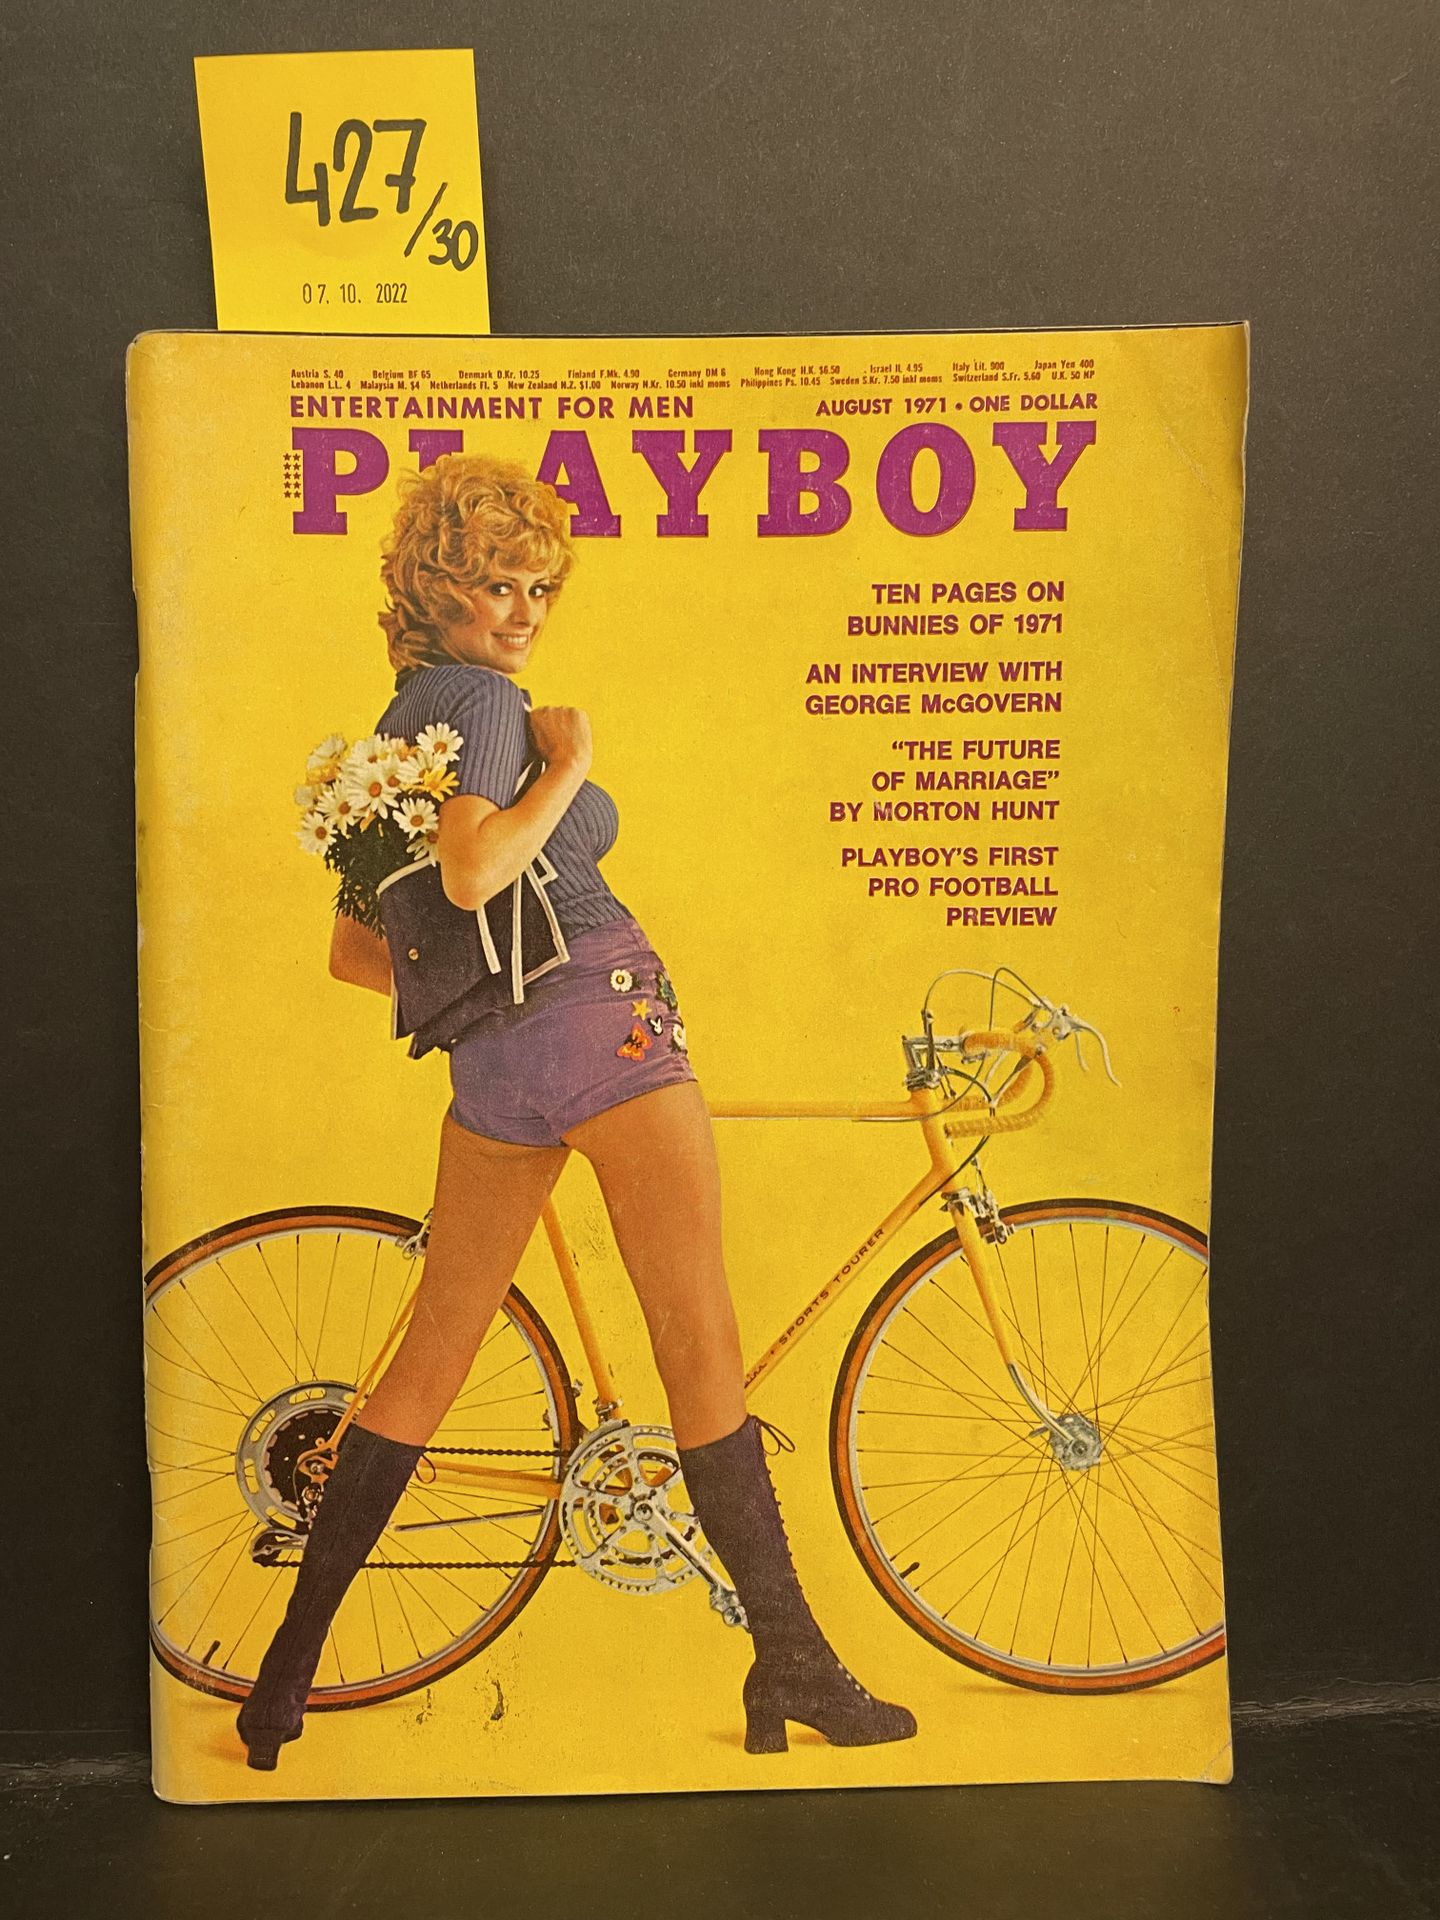 Null "Playboy. Entertainment for Men. Chicago, 1959-1980, 30 vols. 4°, stapled (&hellip;